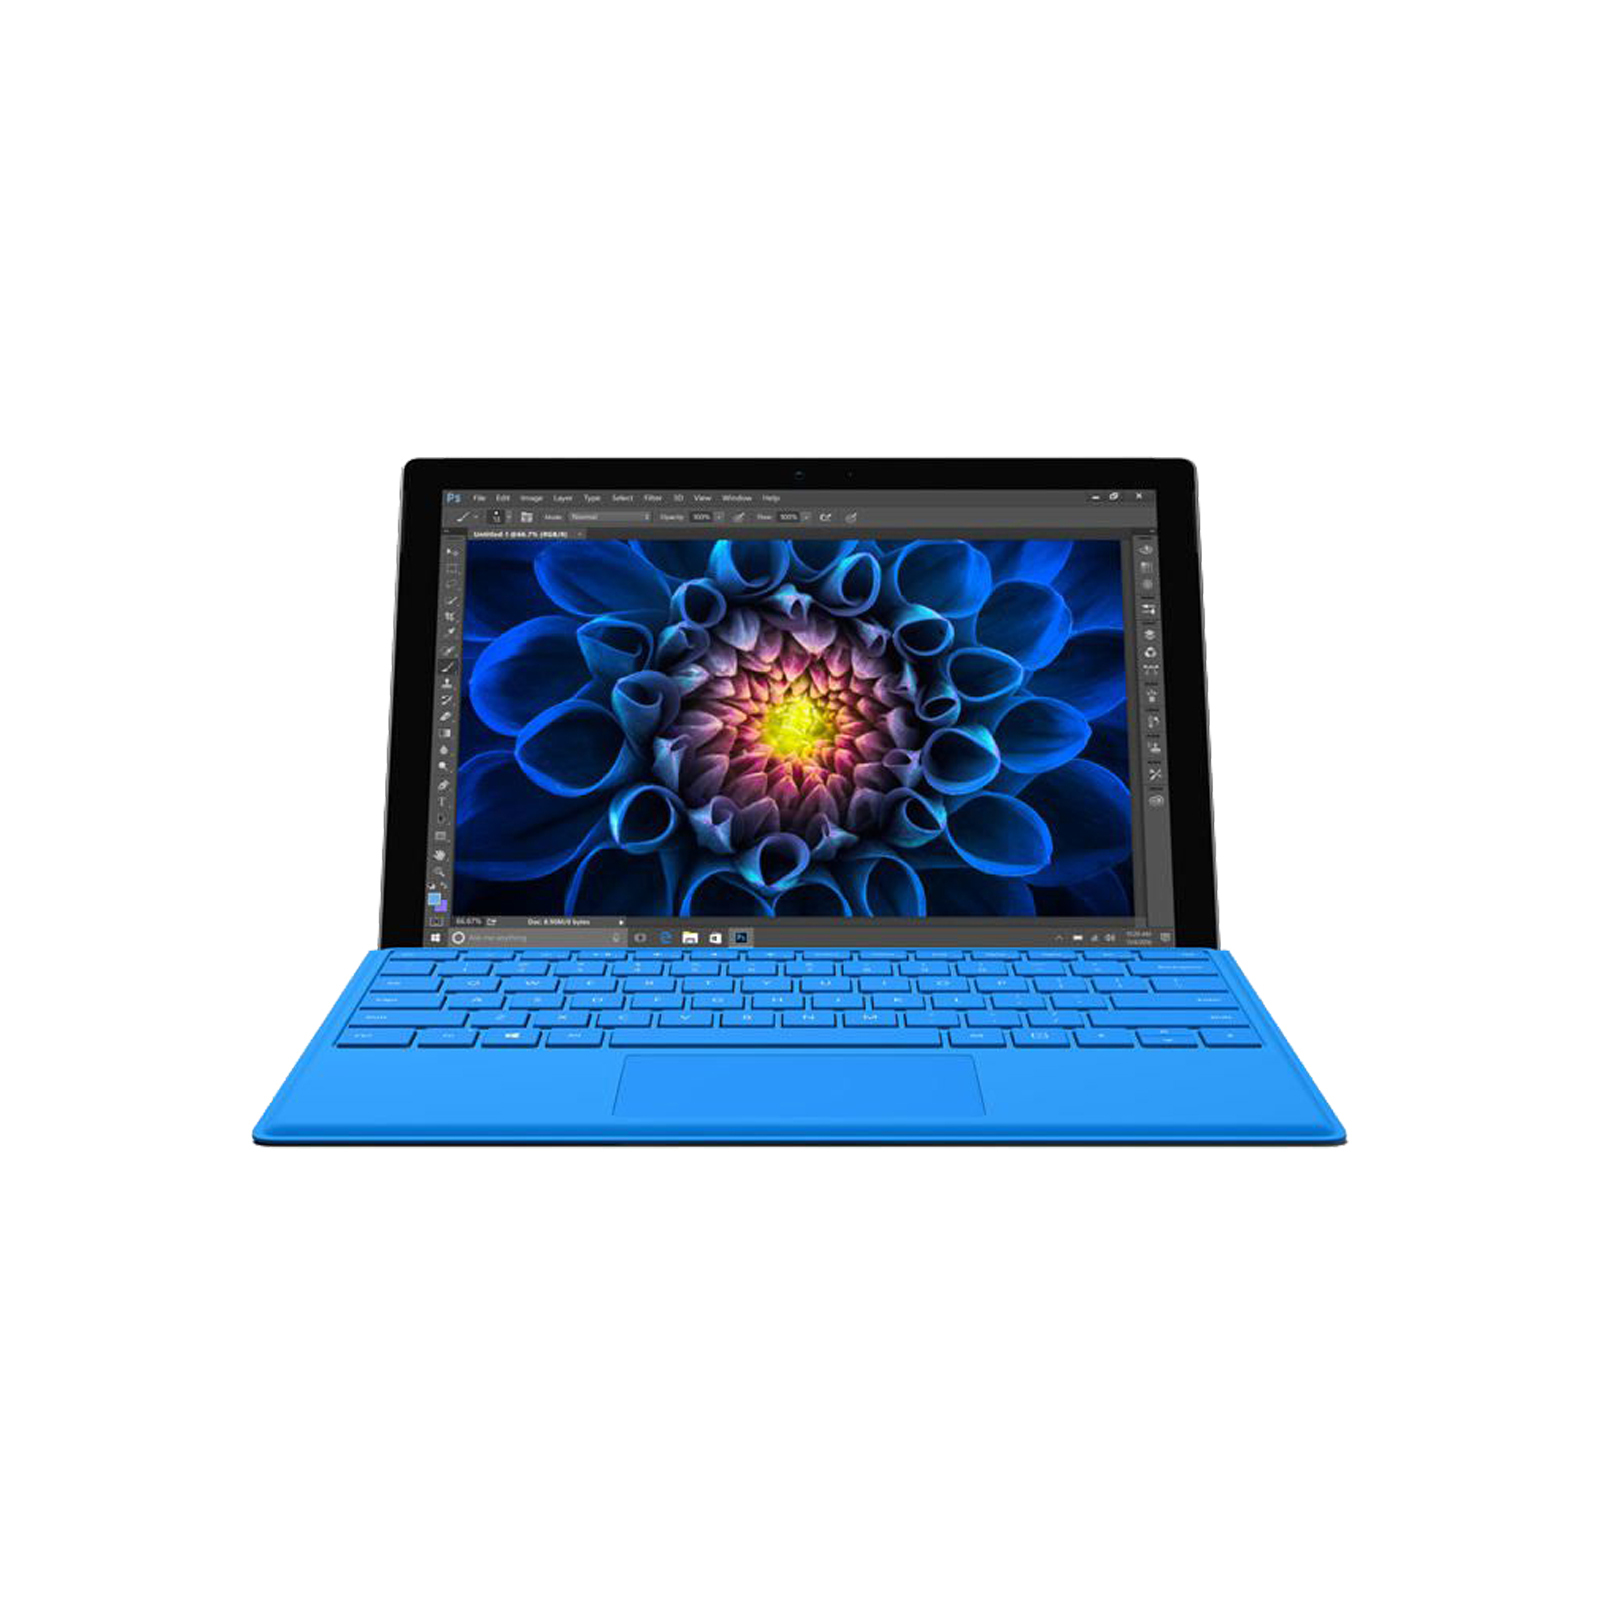 Microsoft Surface Pro 4 Windows 10 12.3" Silver Wi-Fi - Good Condition